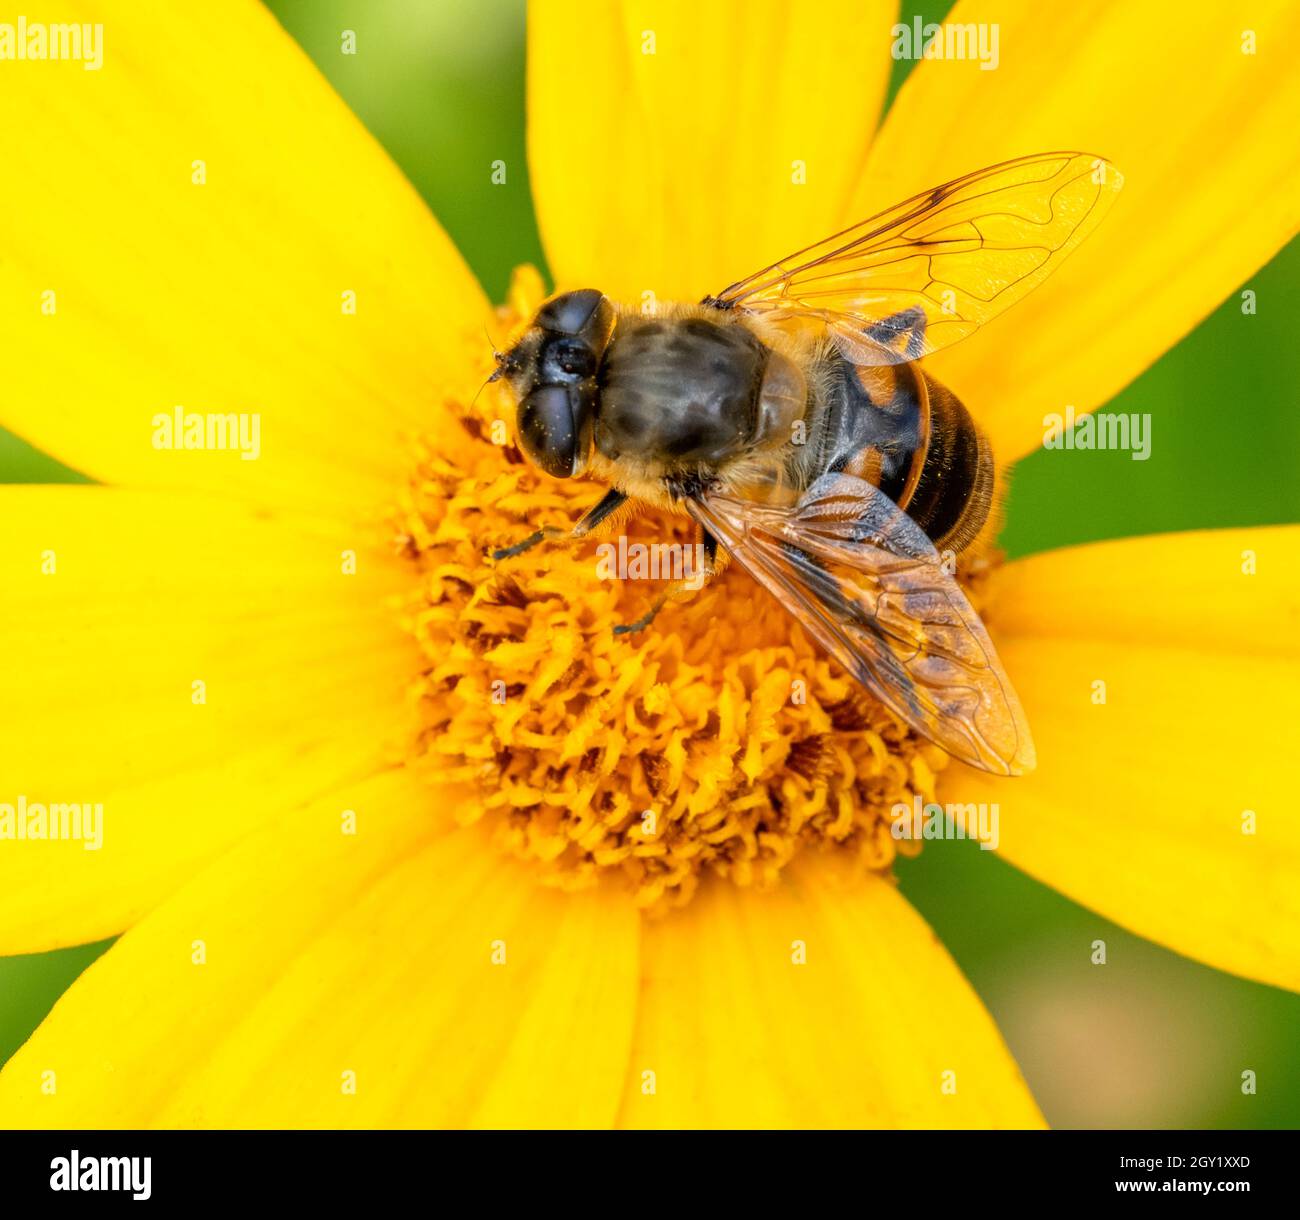 British honey bee gathering nectar from a yellow flower Stock Photo